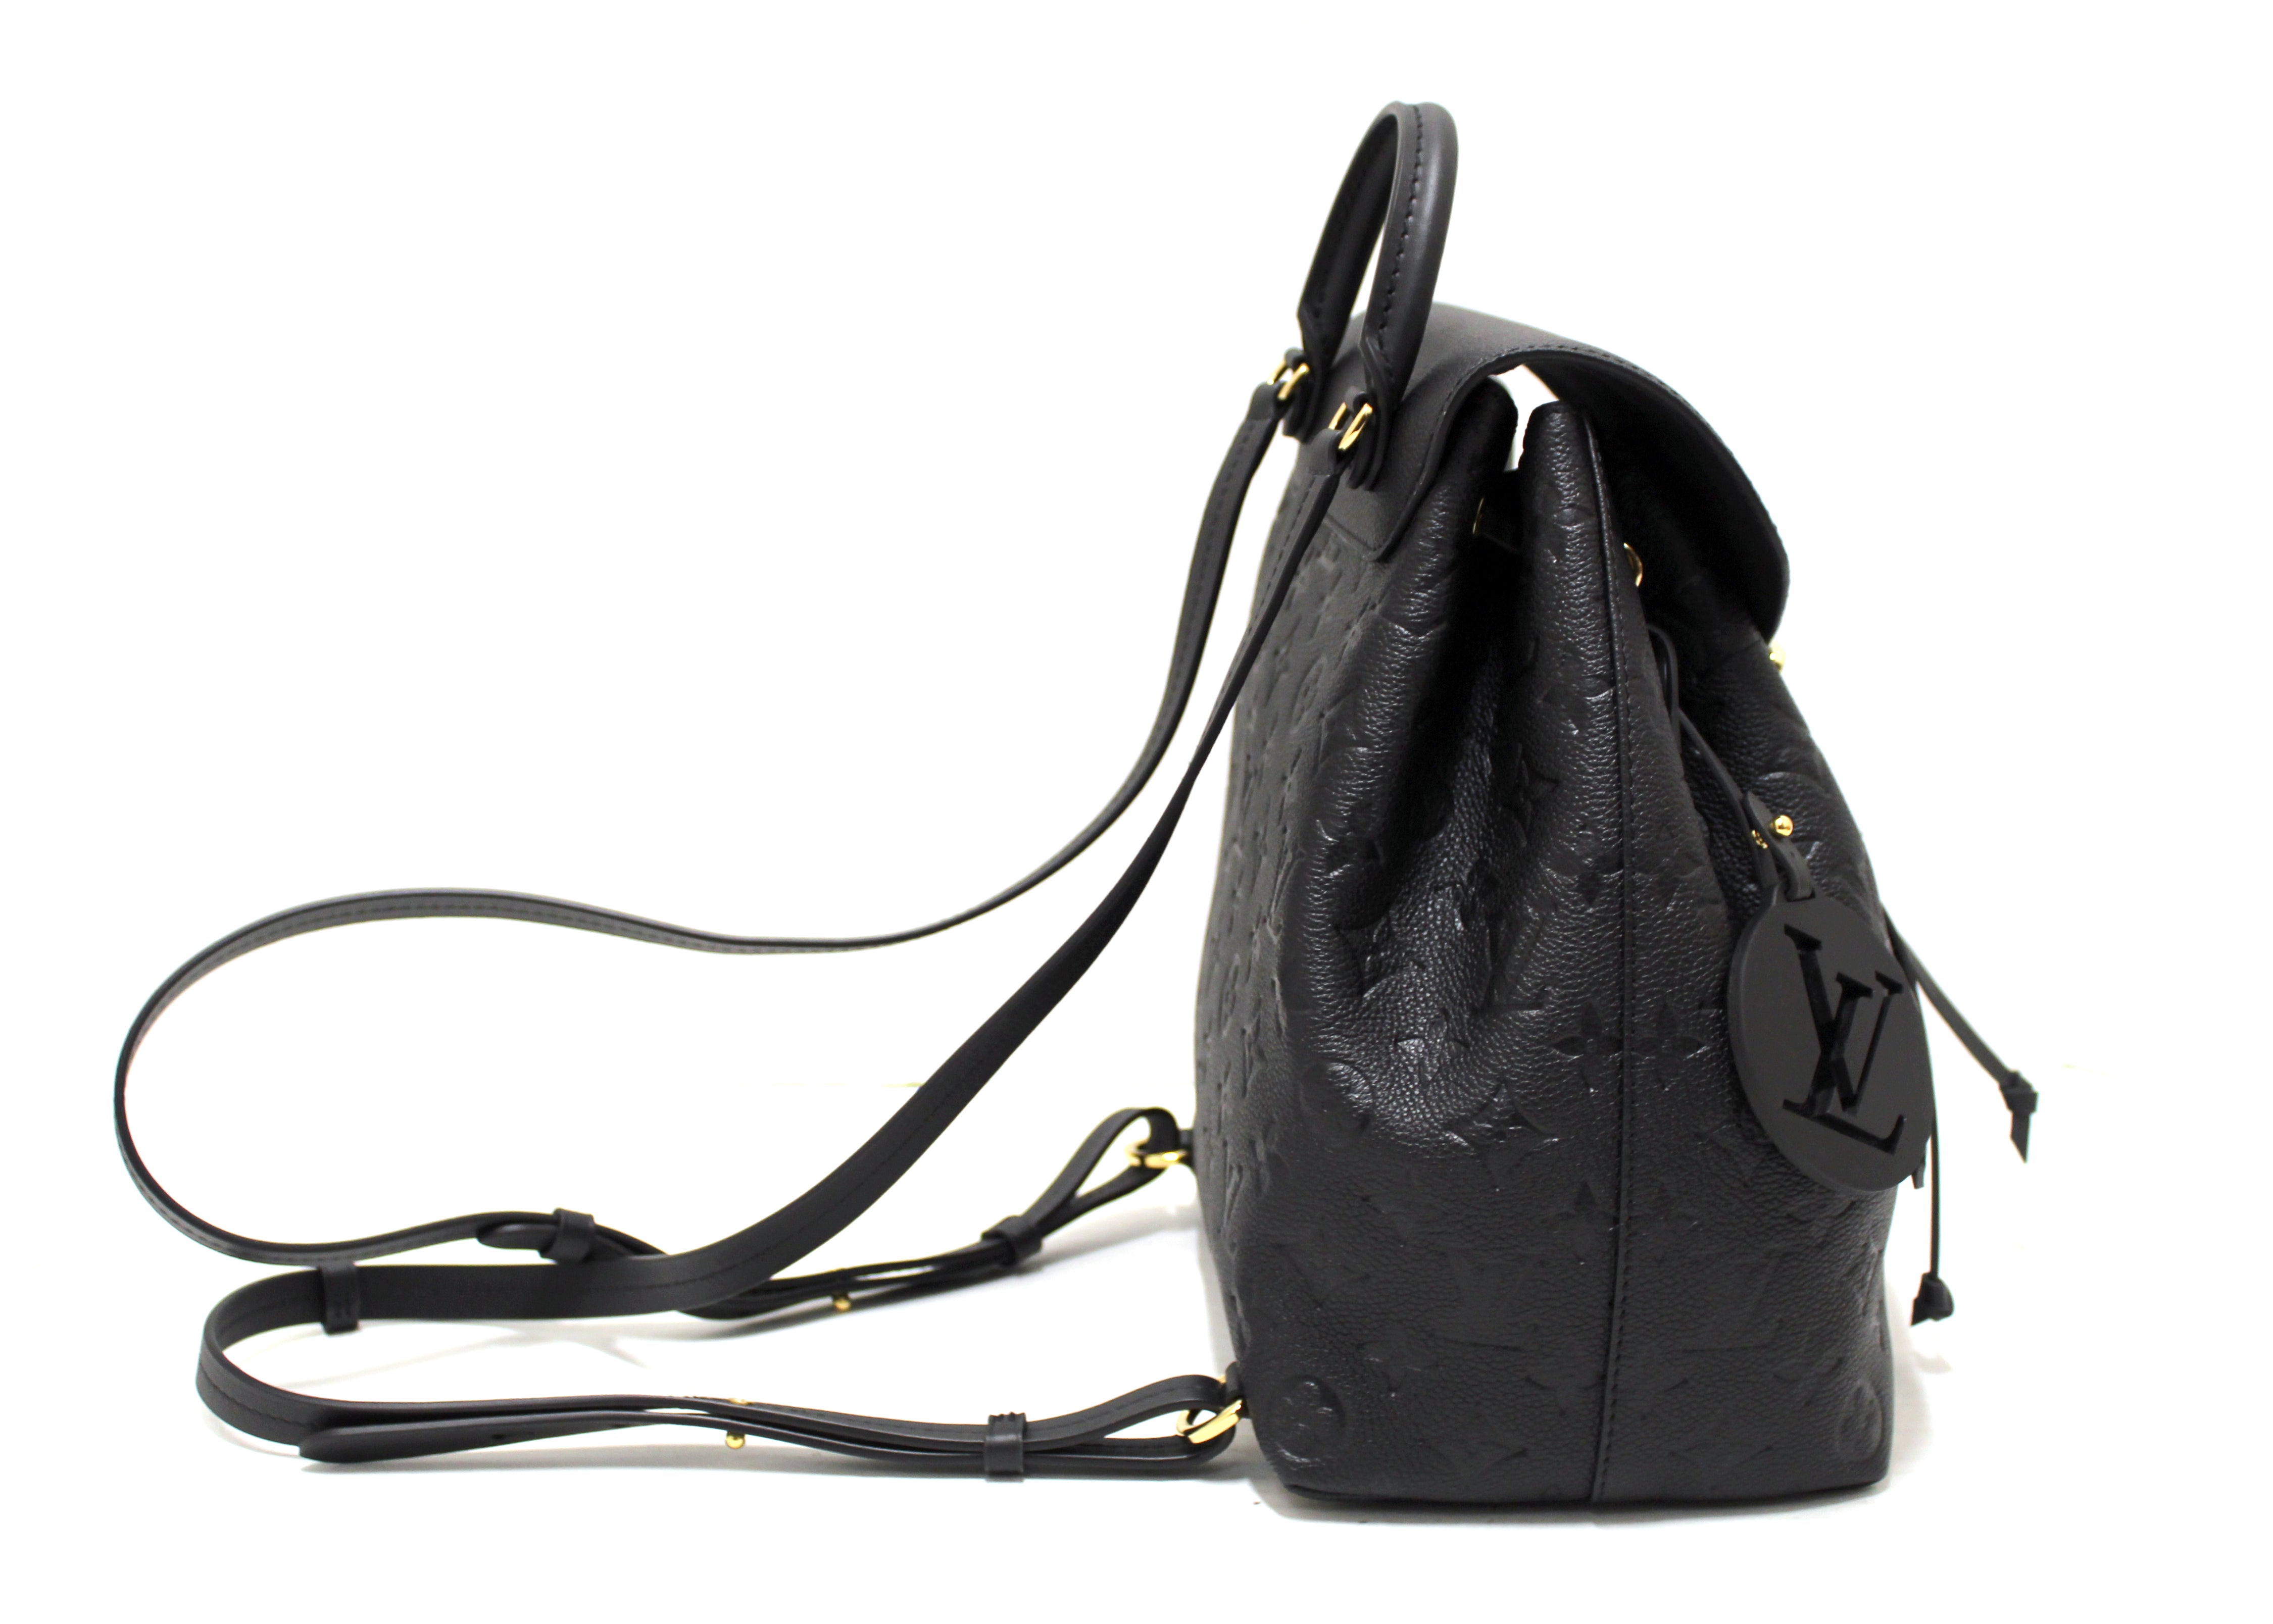 Montsouris Backpack Monogram Empreinte Leather in Black - Handbags M45205, LOUIS VUITTON ®